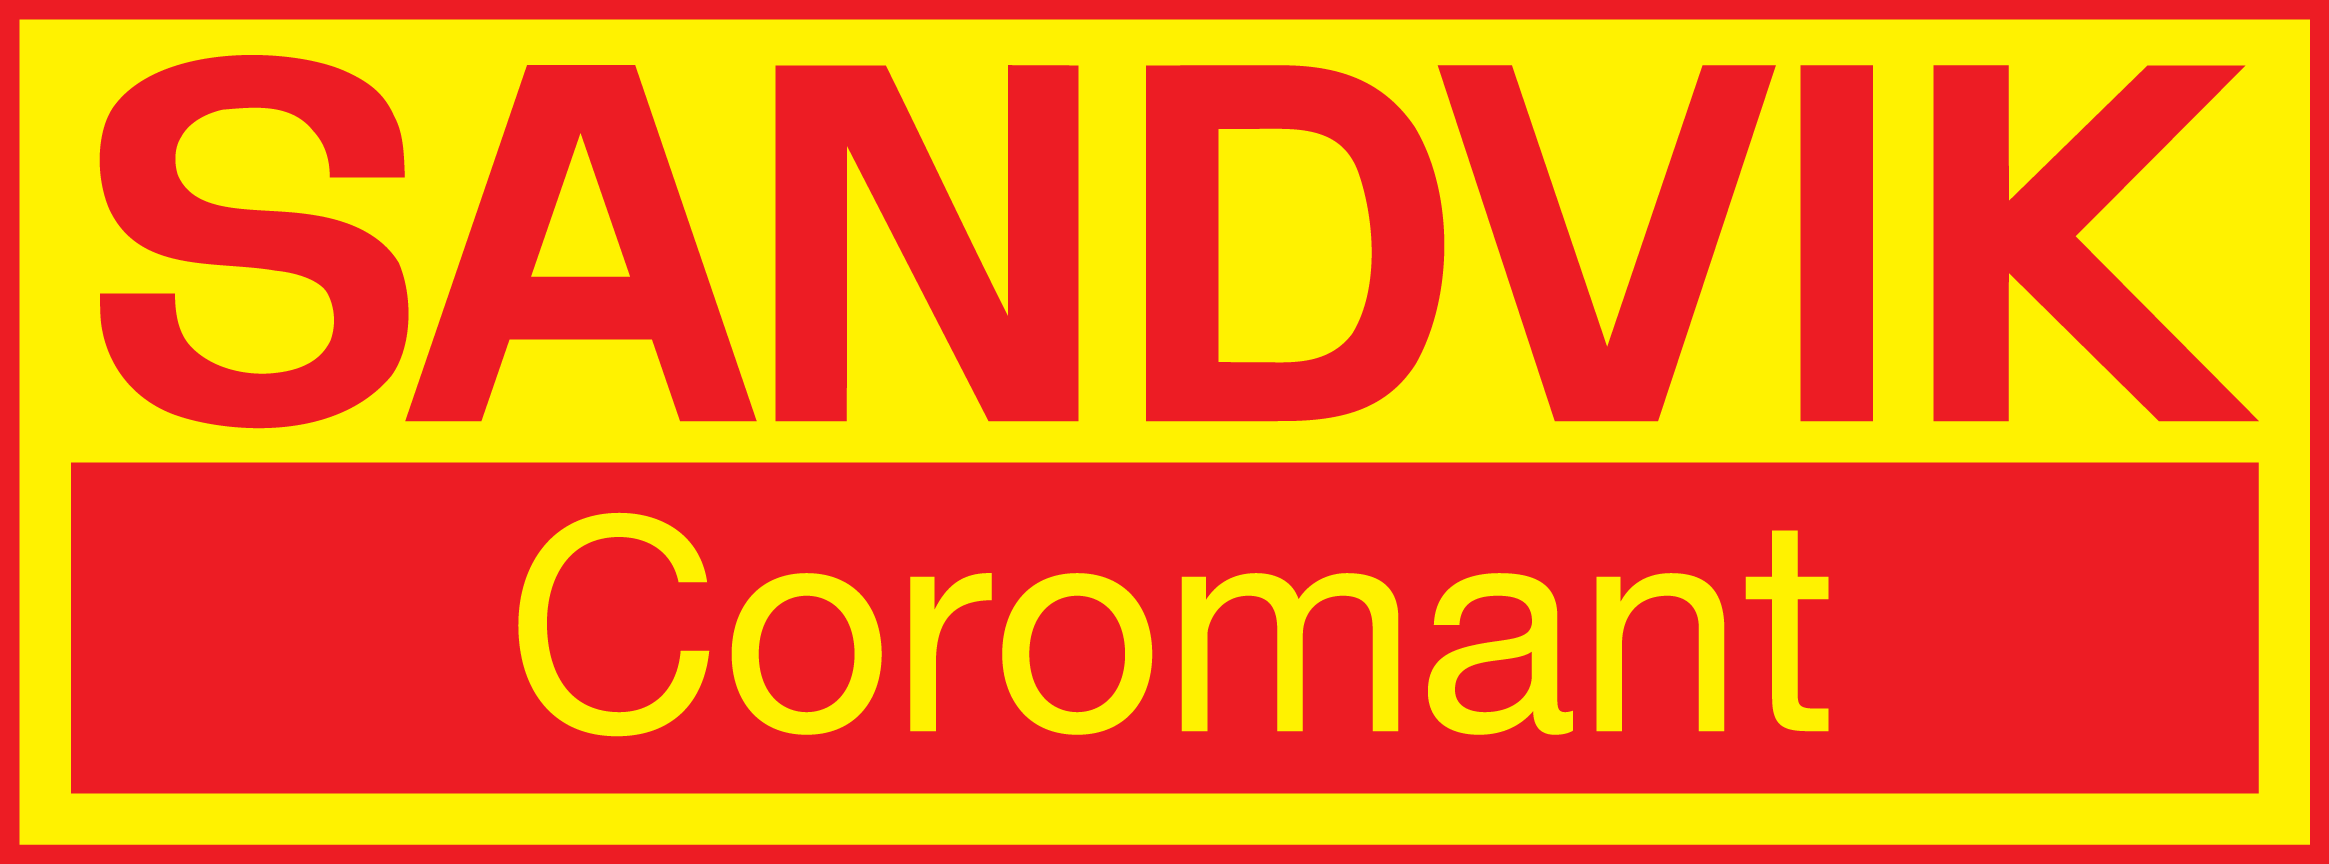 SANDVIK Coromant logo.